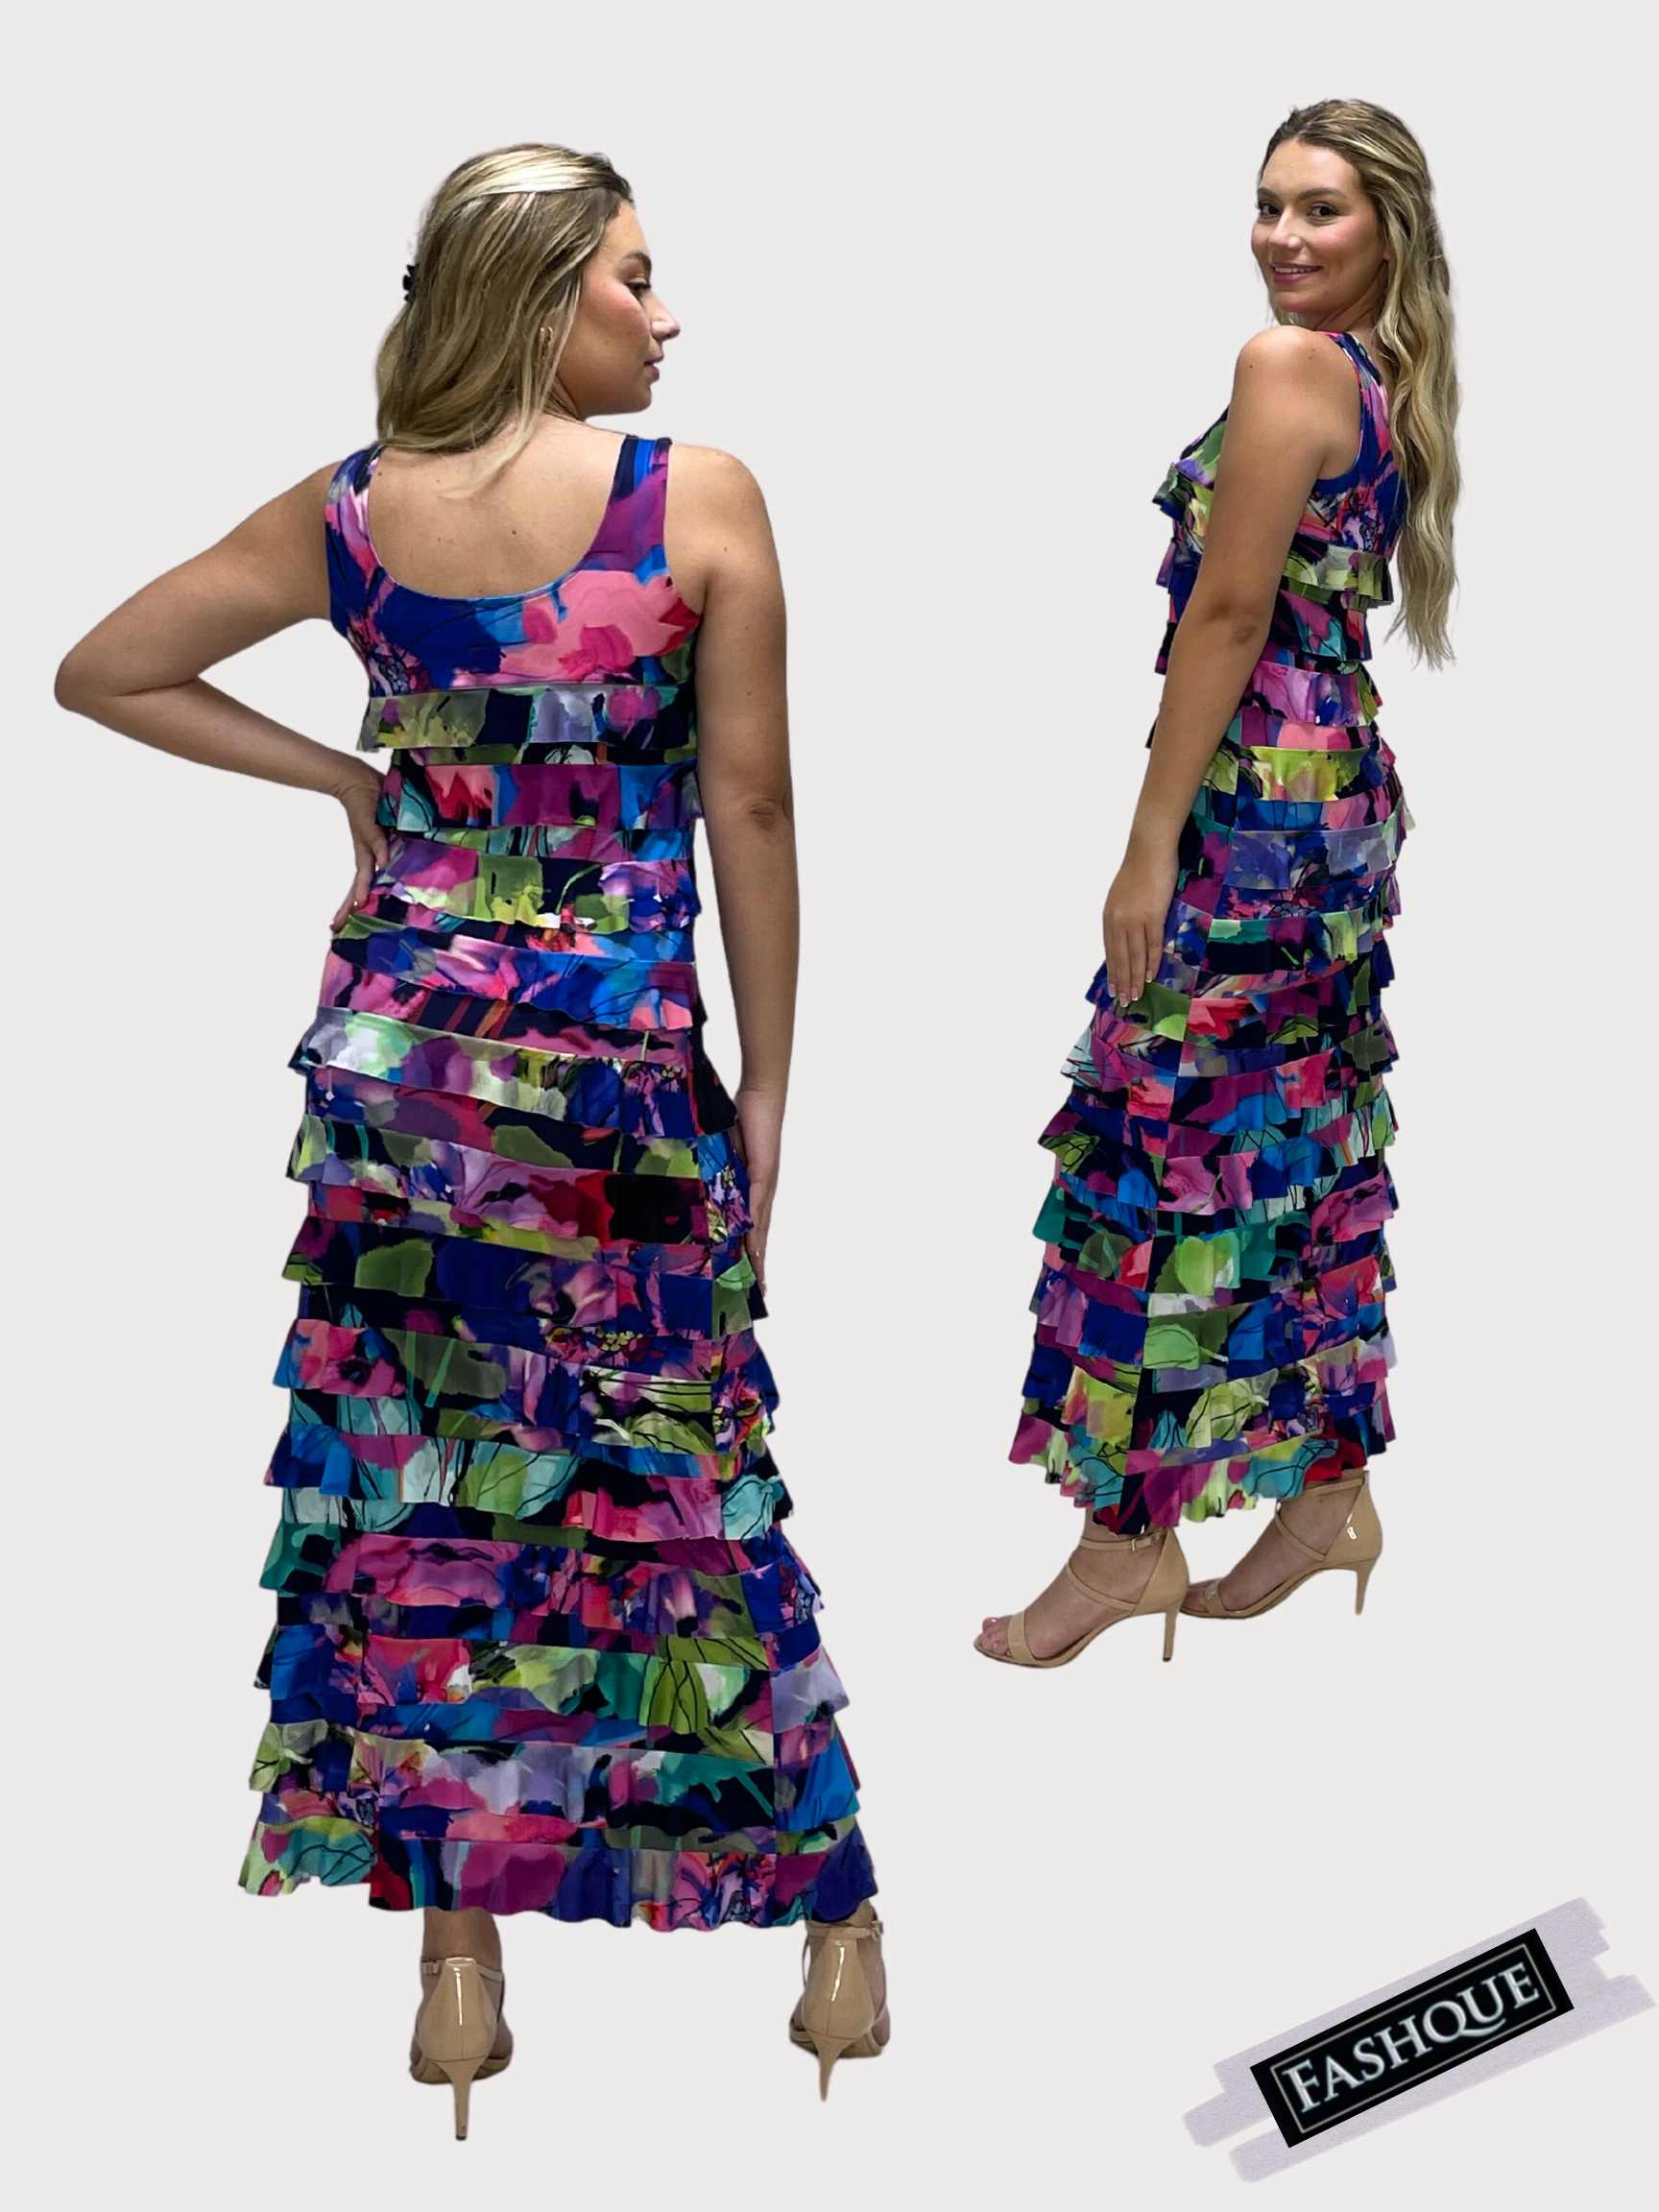 Print #8024 - FASHQUE - Ruffle Maxi Dress Sleeveless NEW PRINTED - D2211